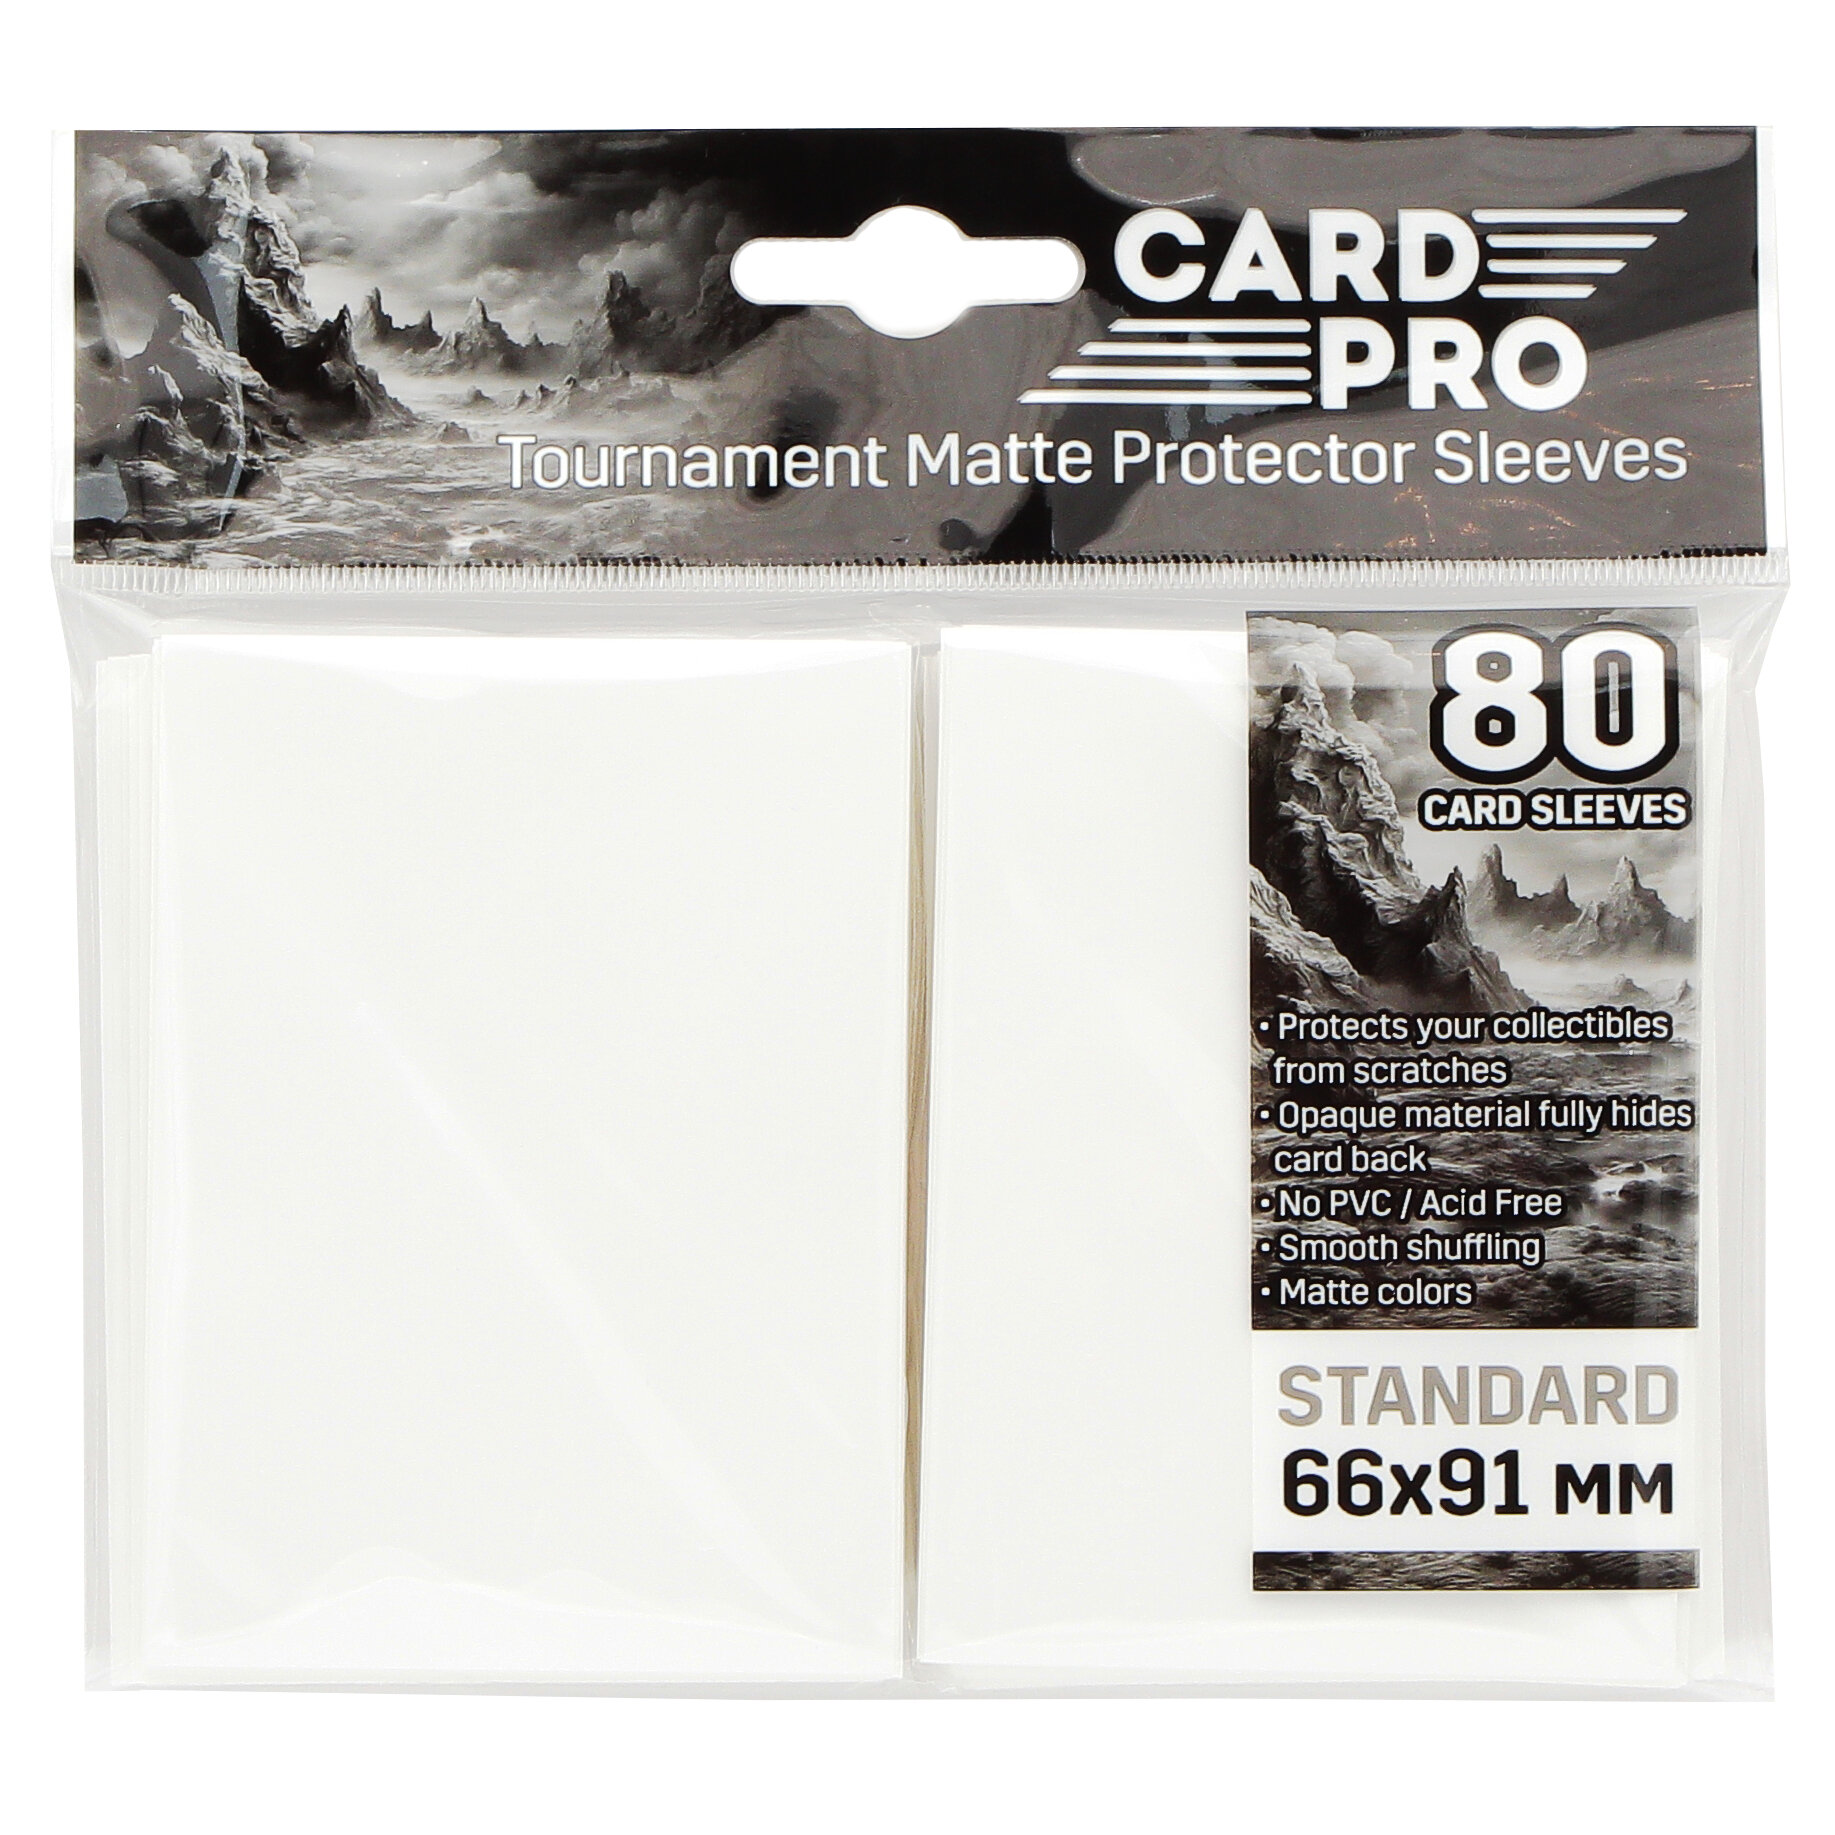 Протекторы Card-Pro Белые 66x91 мм, 80 шт. для карт MTG, Pokemon